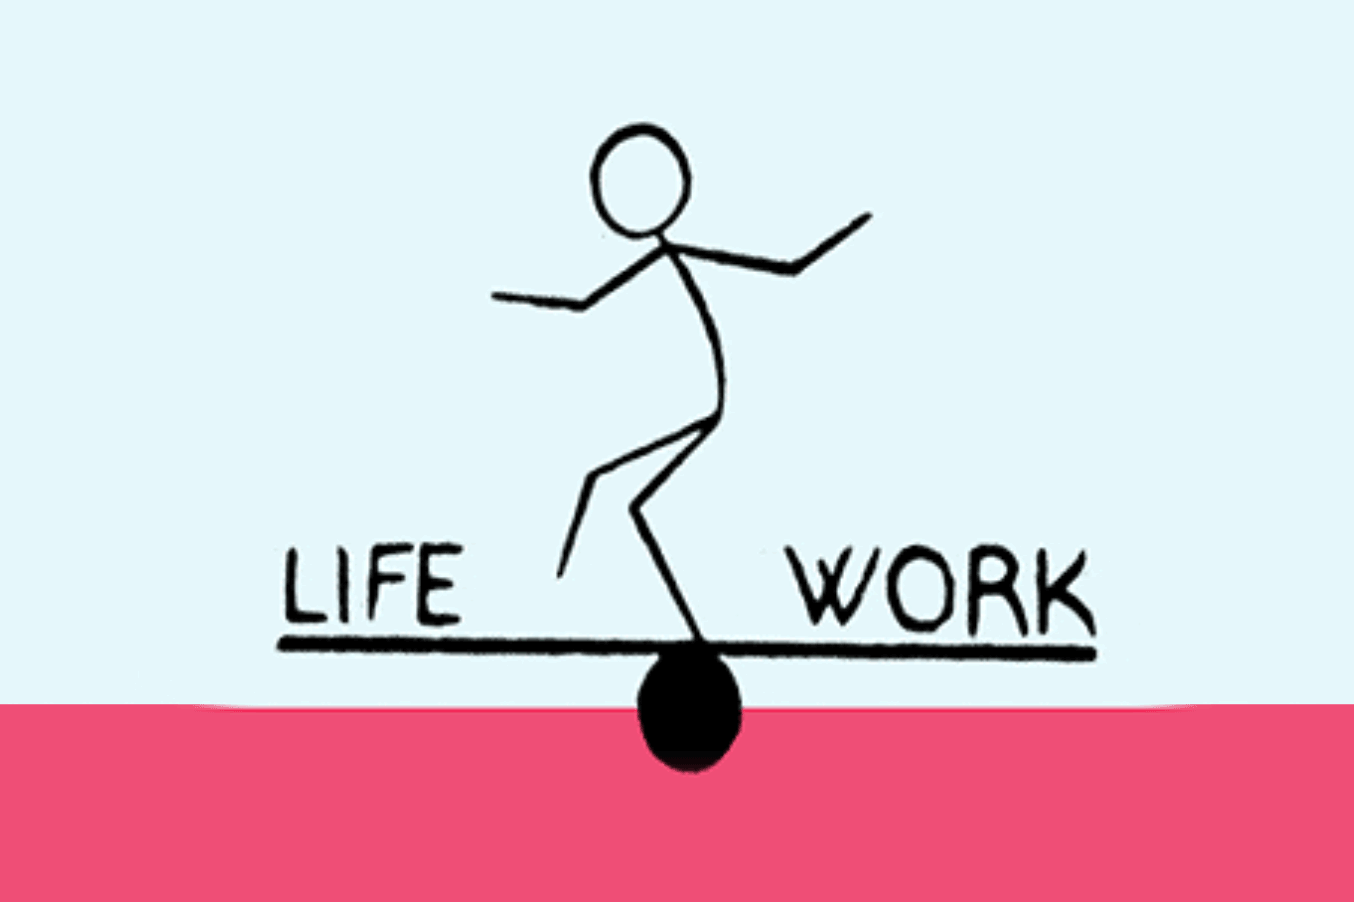 life work balance